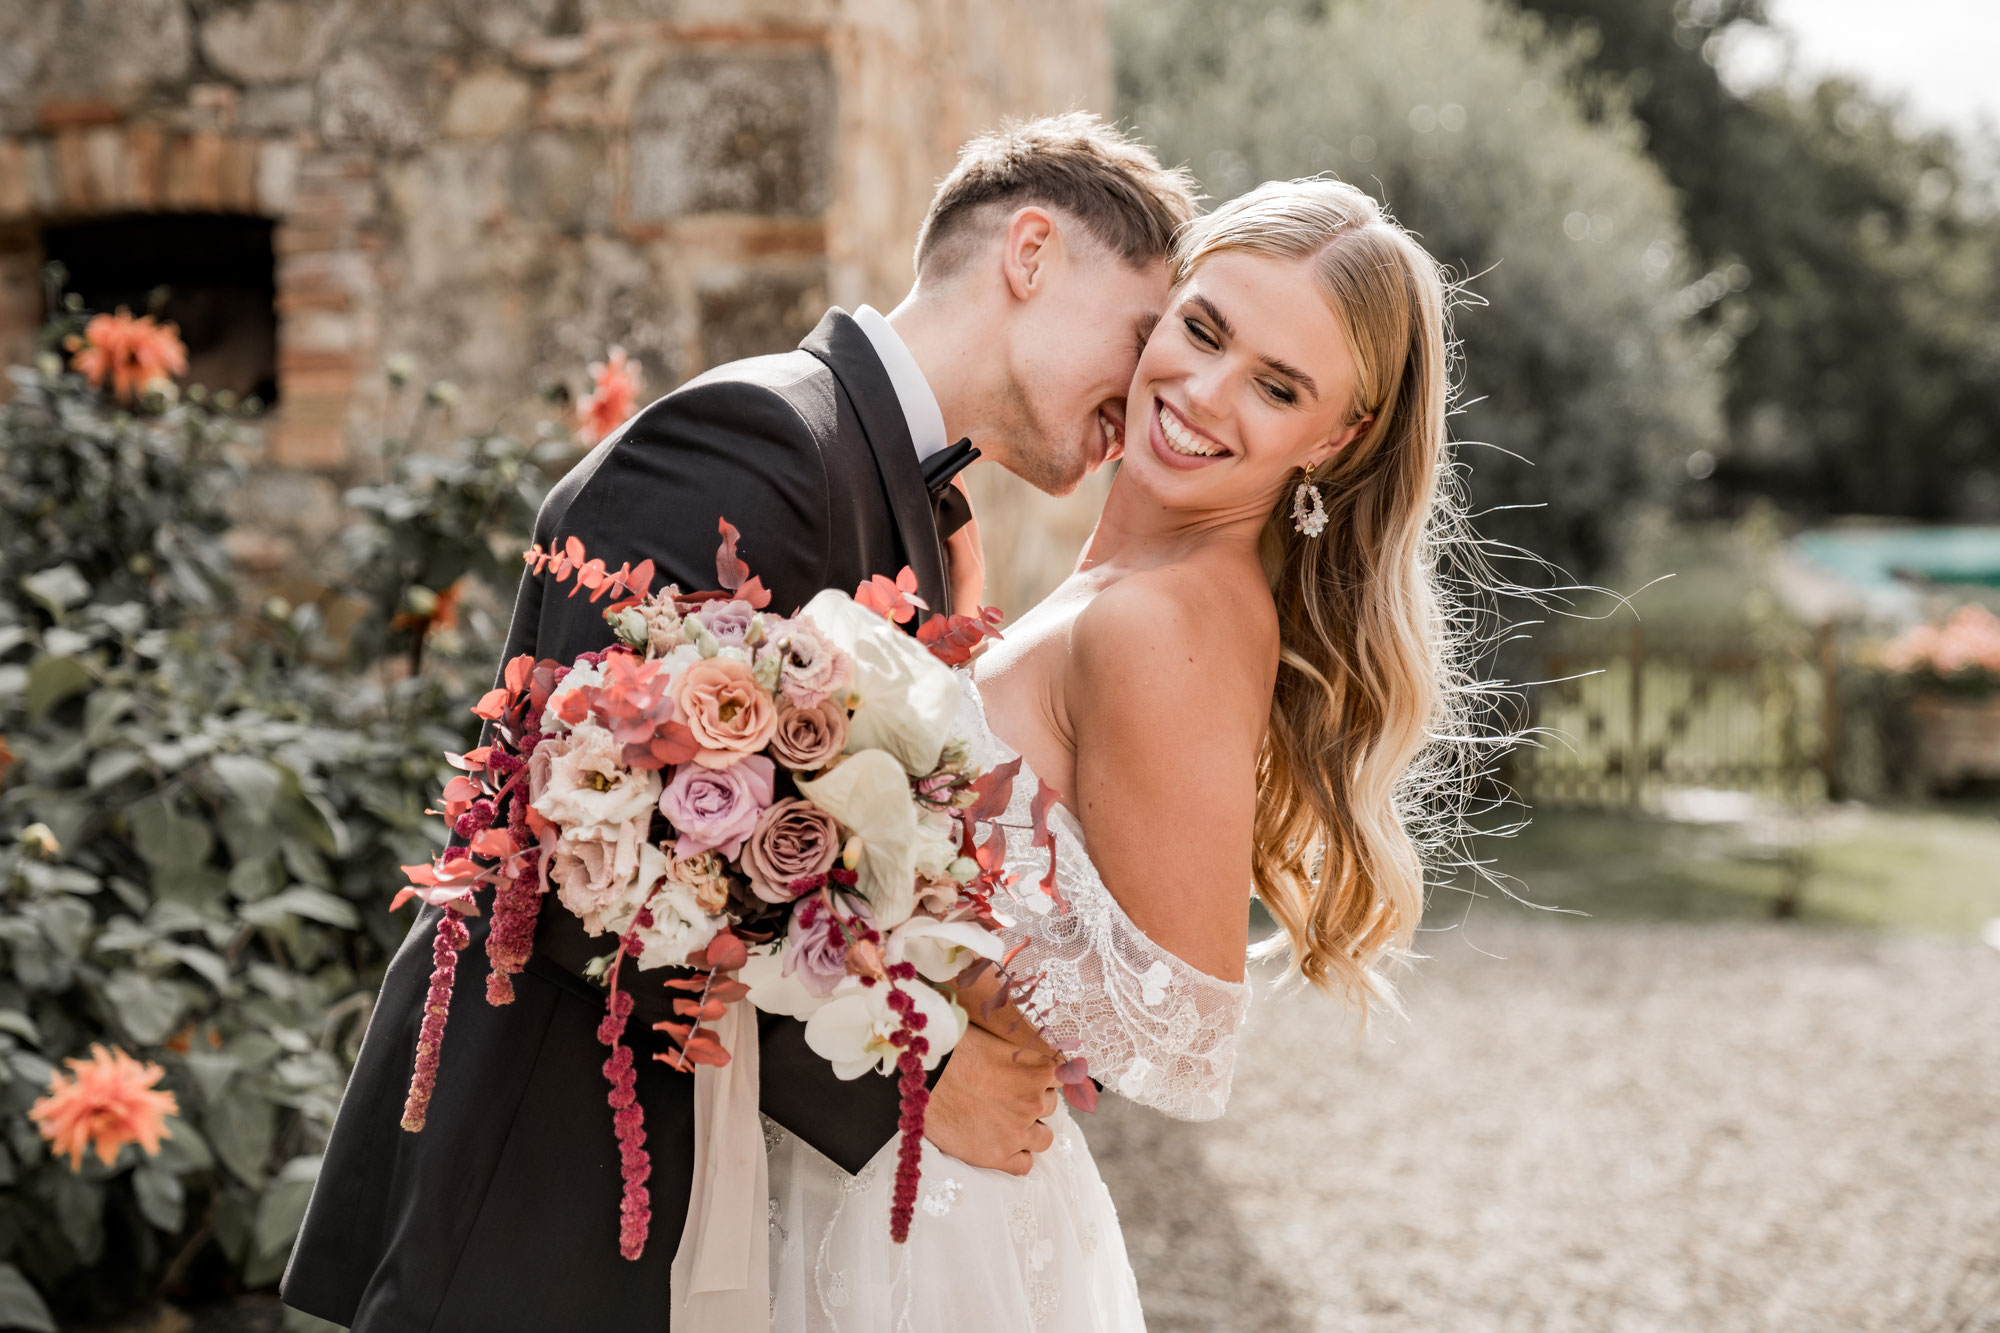 Zara & Harry - Wedding Inspiration in der Toskana